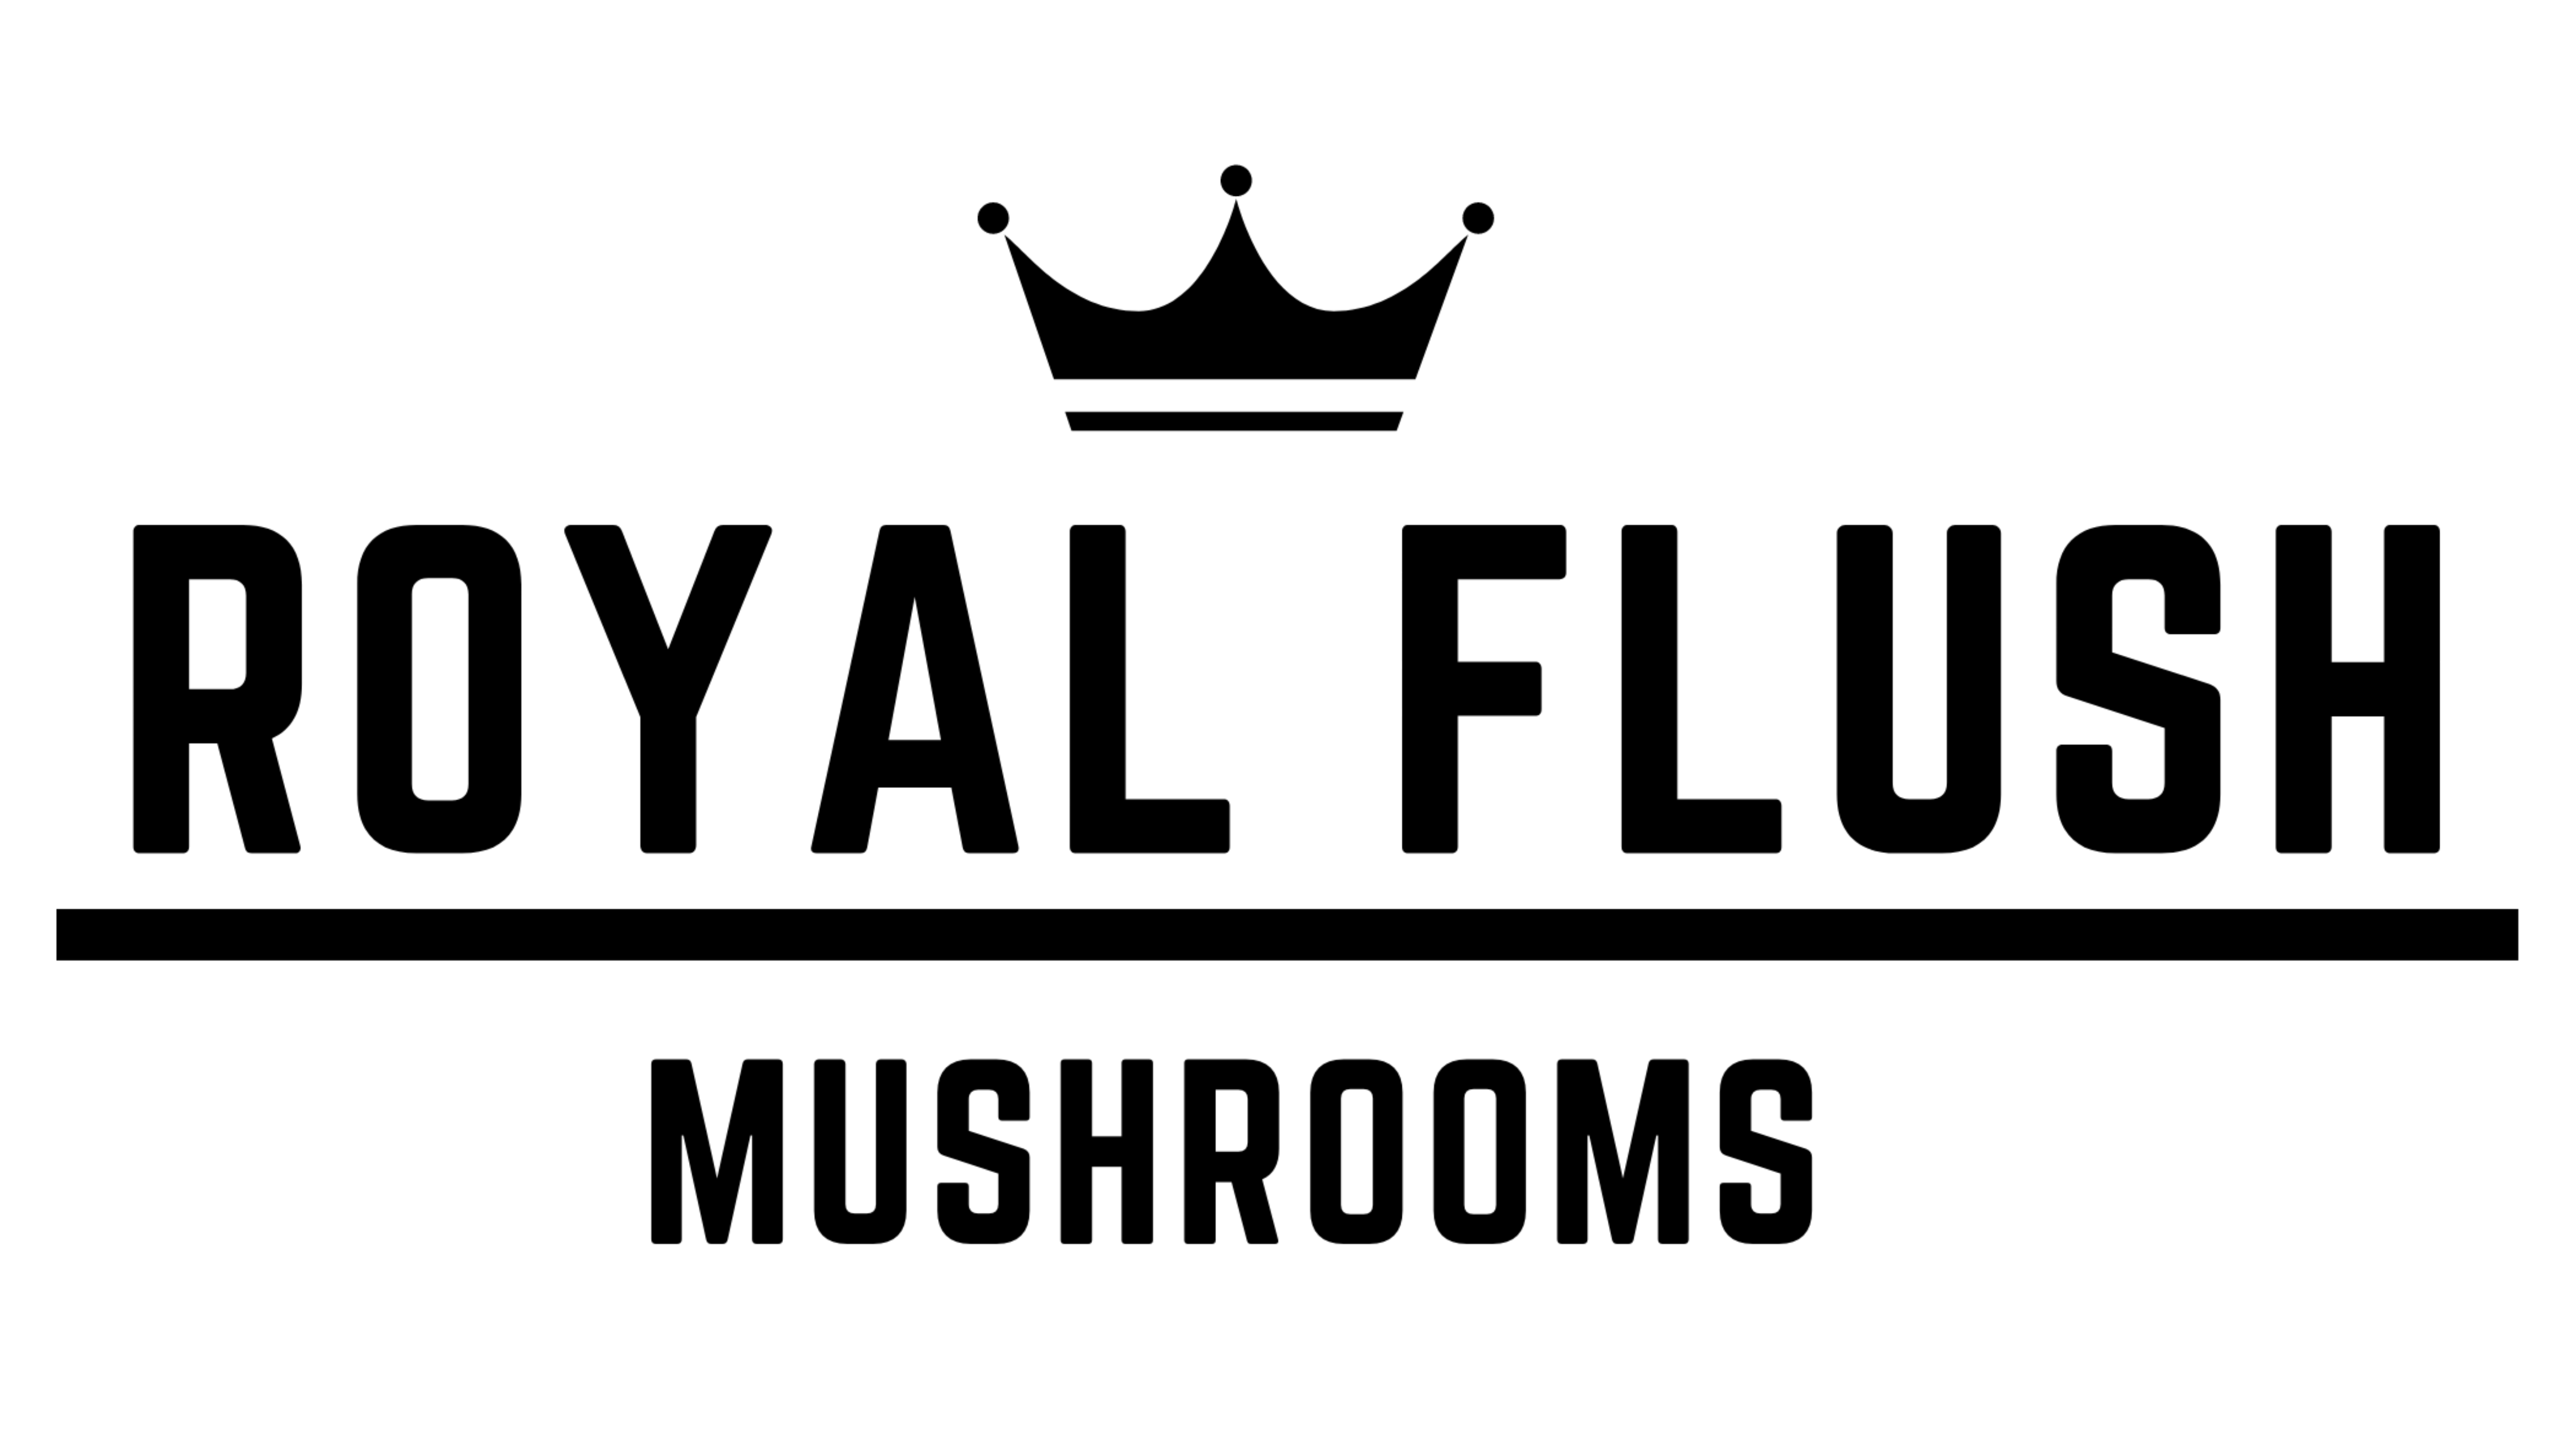 1 Quart of Grain Spawn (1lb.) – Royal Flush Mushrooms